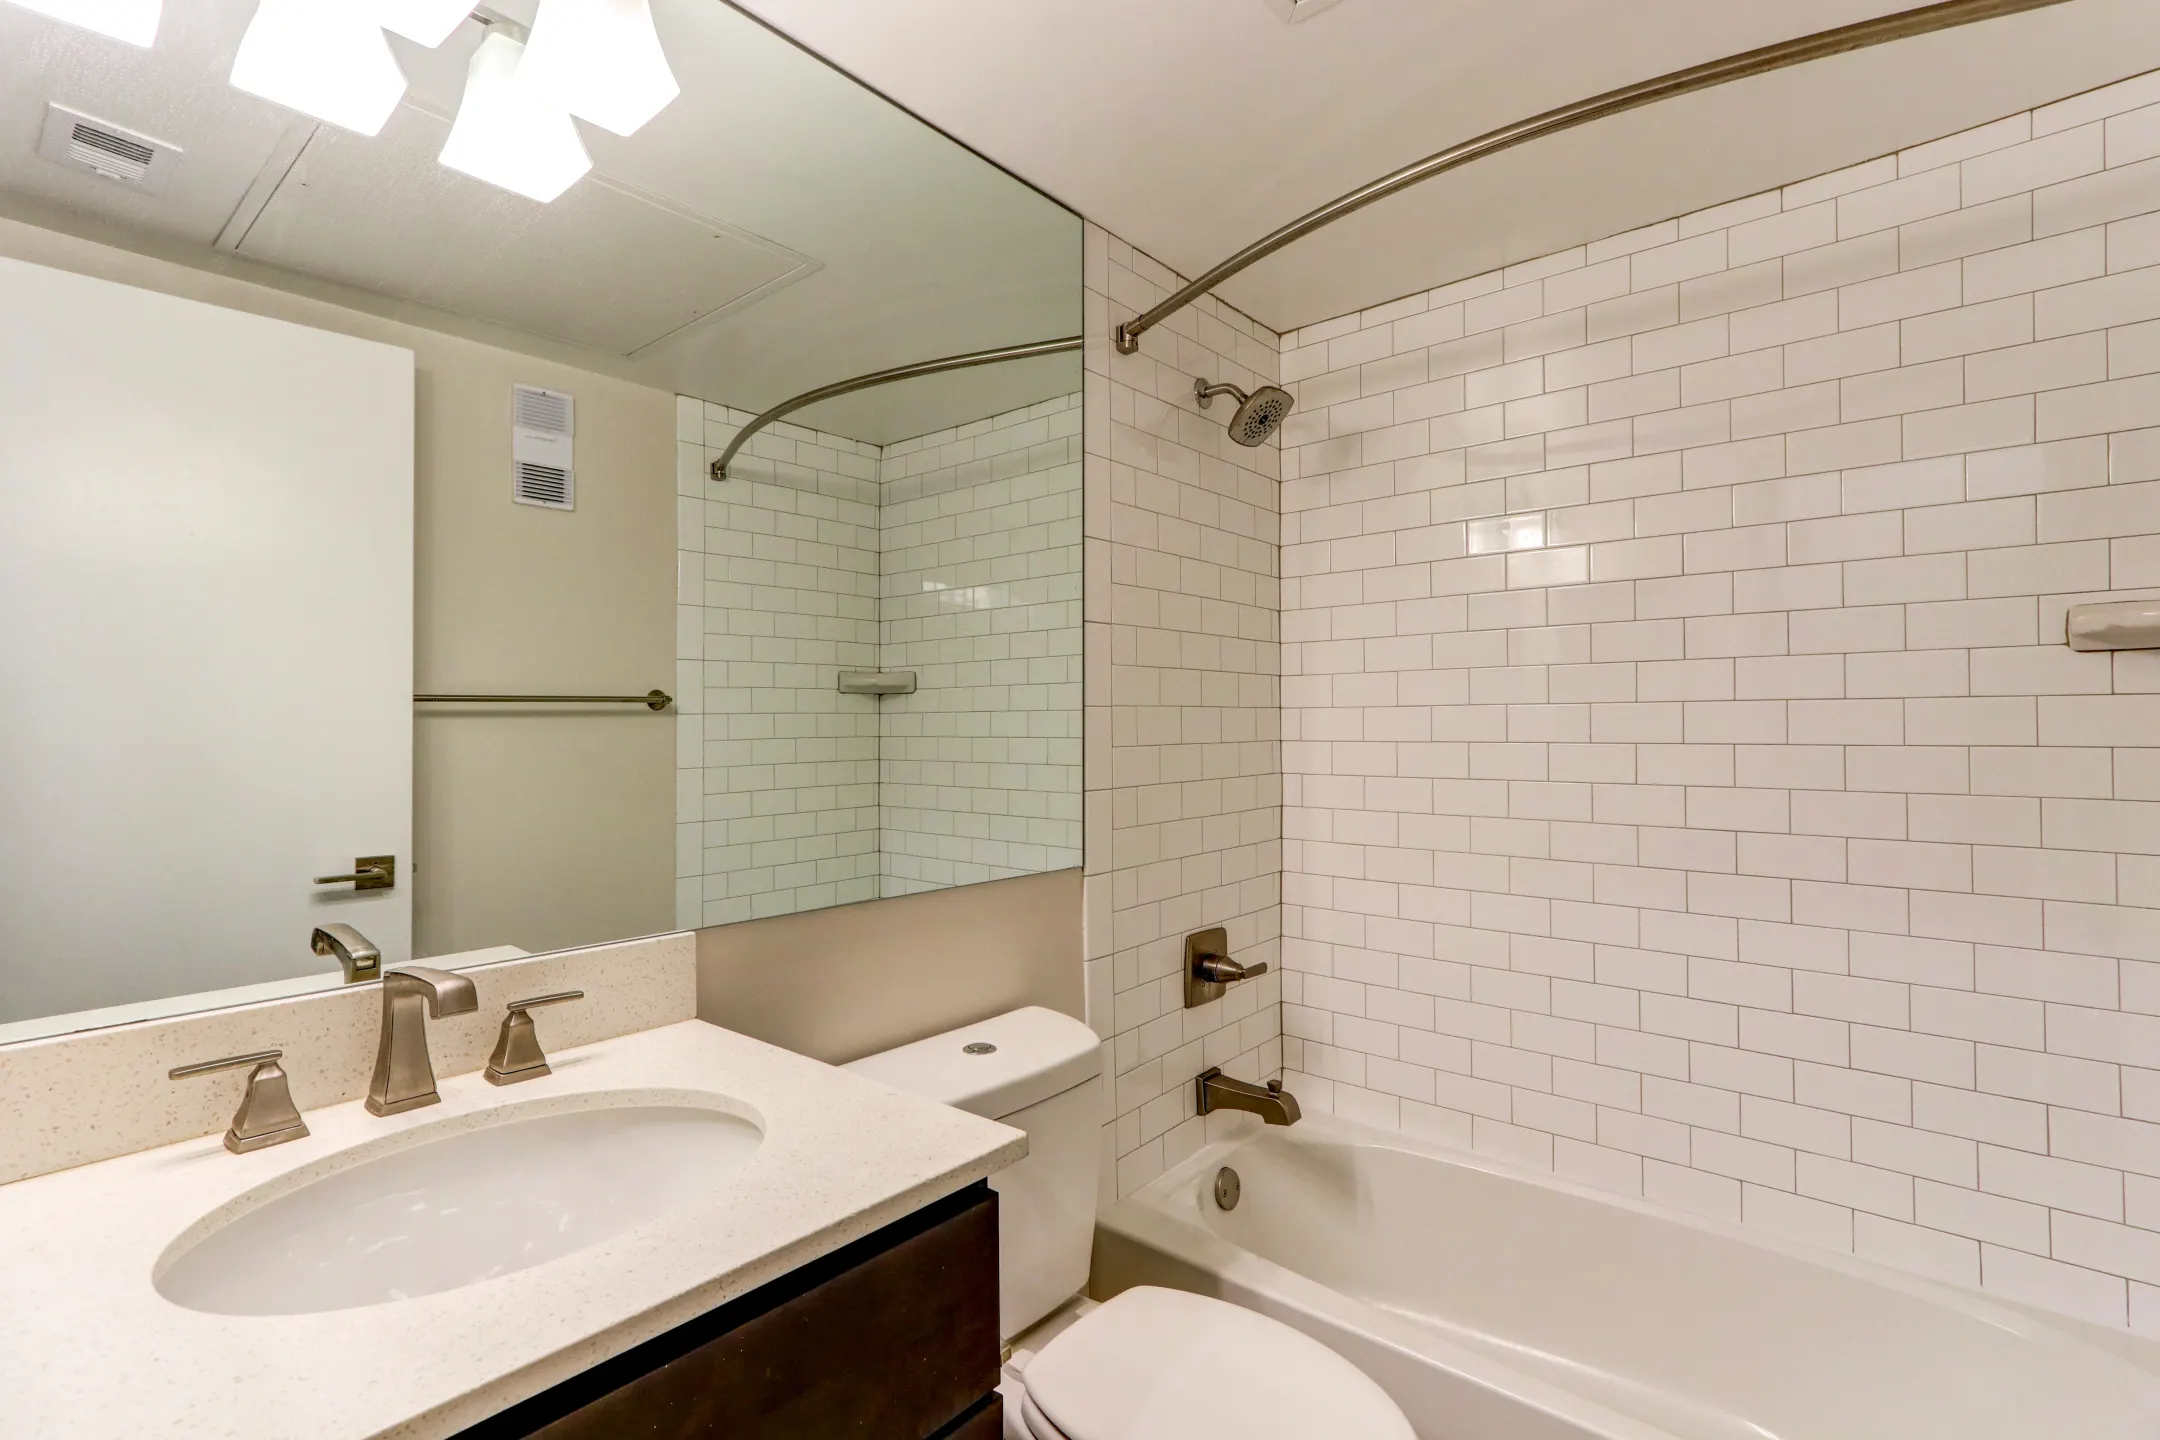 Bathroom - Shadyside Commons - Pittsburgh, PA